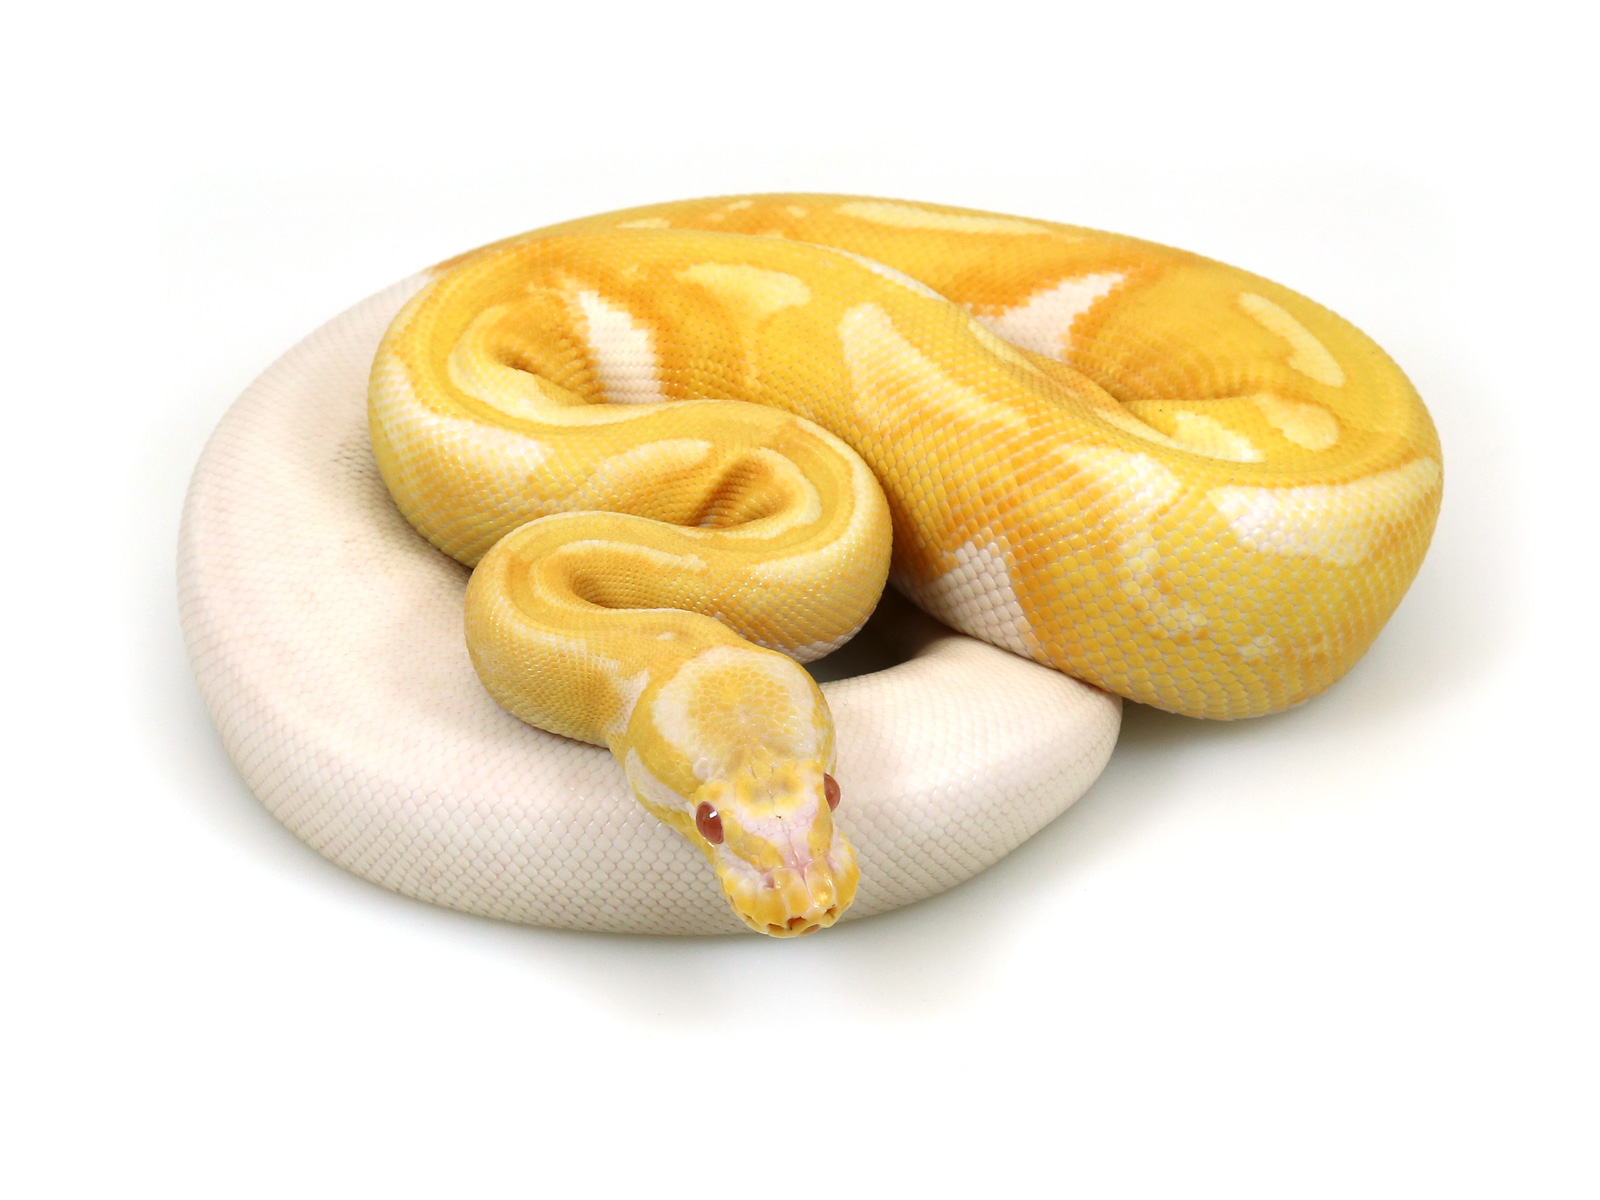 ball python, albino java piebald